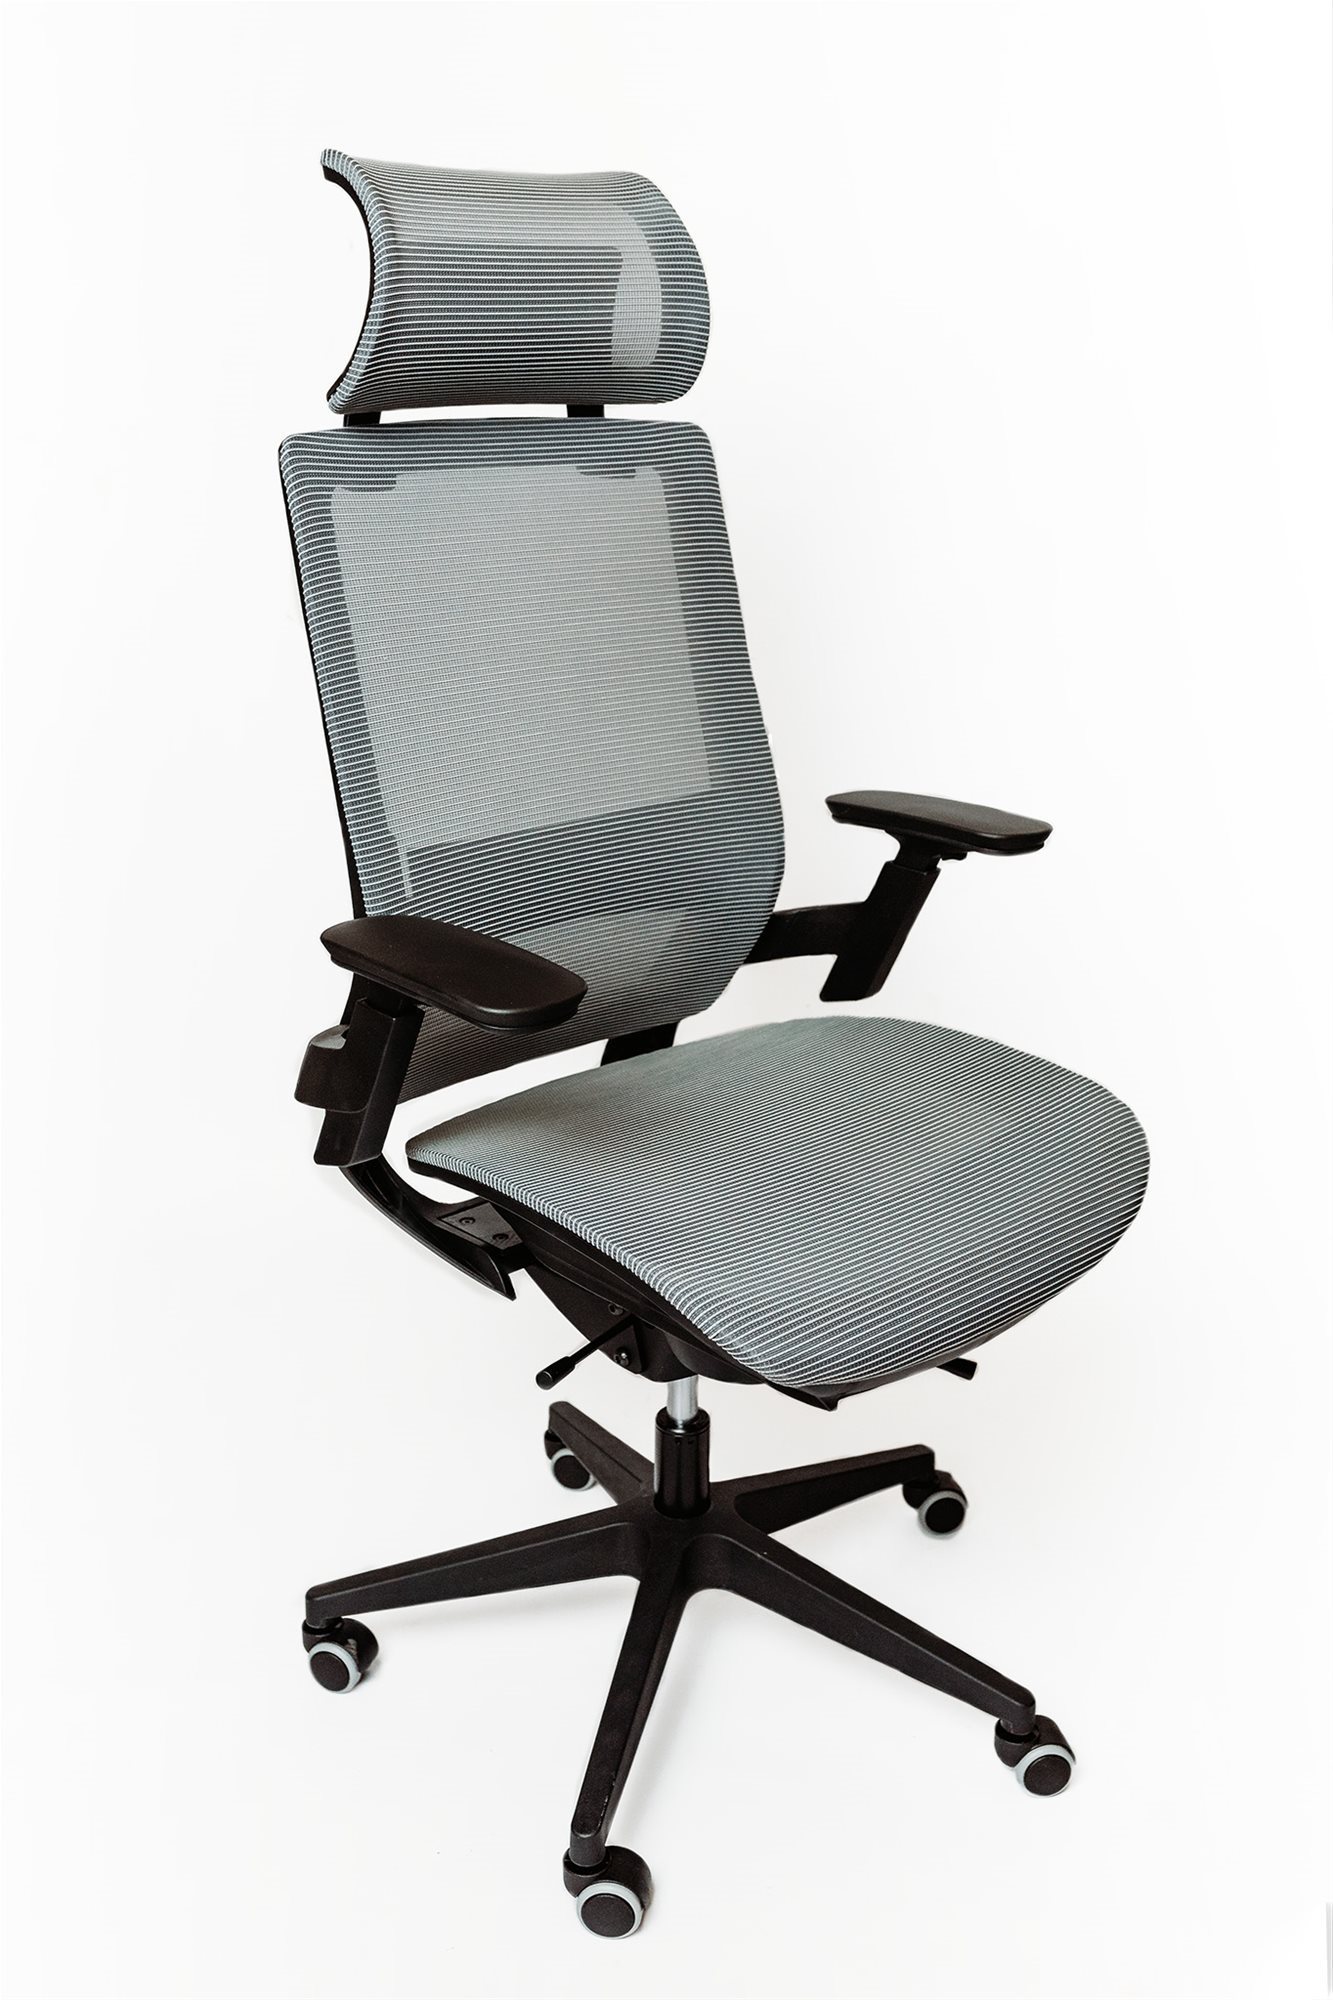 Irodai szék SPINERGO Optimal - szürke